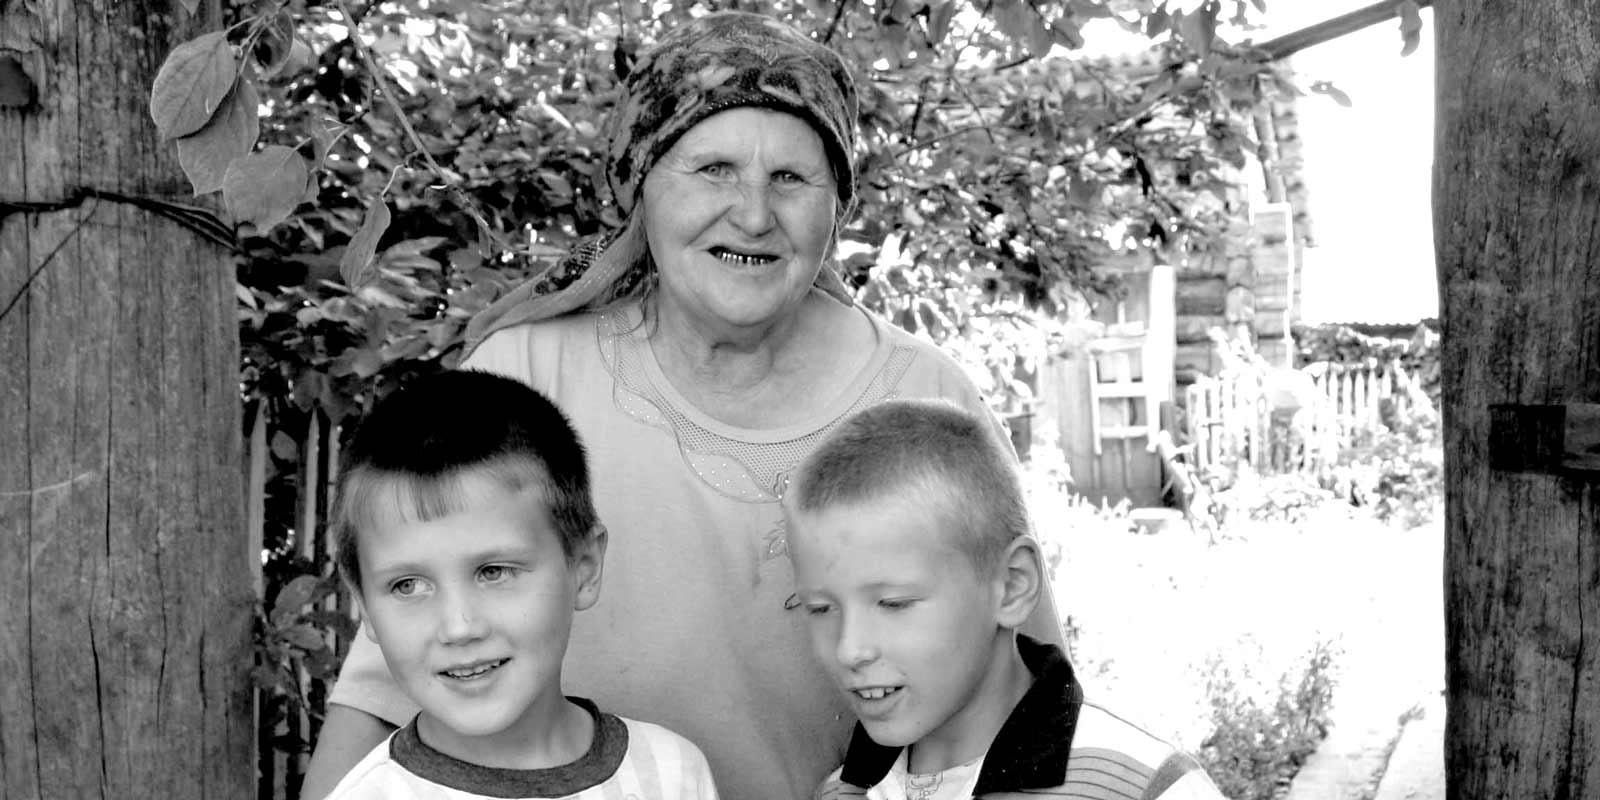 Maria Peterson with her grandchildren, Haidak village. Photo by Andreas Kalkun, 2008 (ERA).